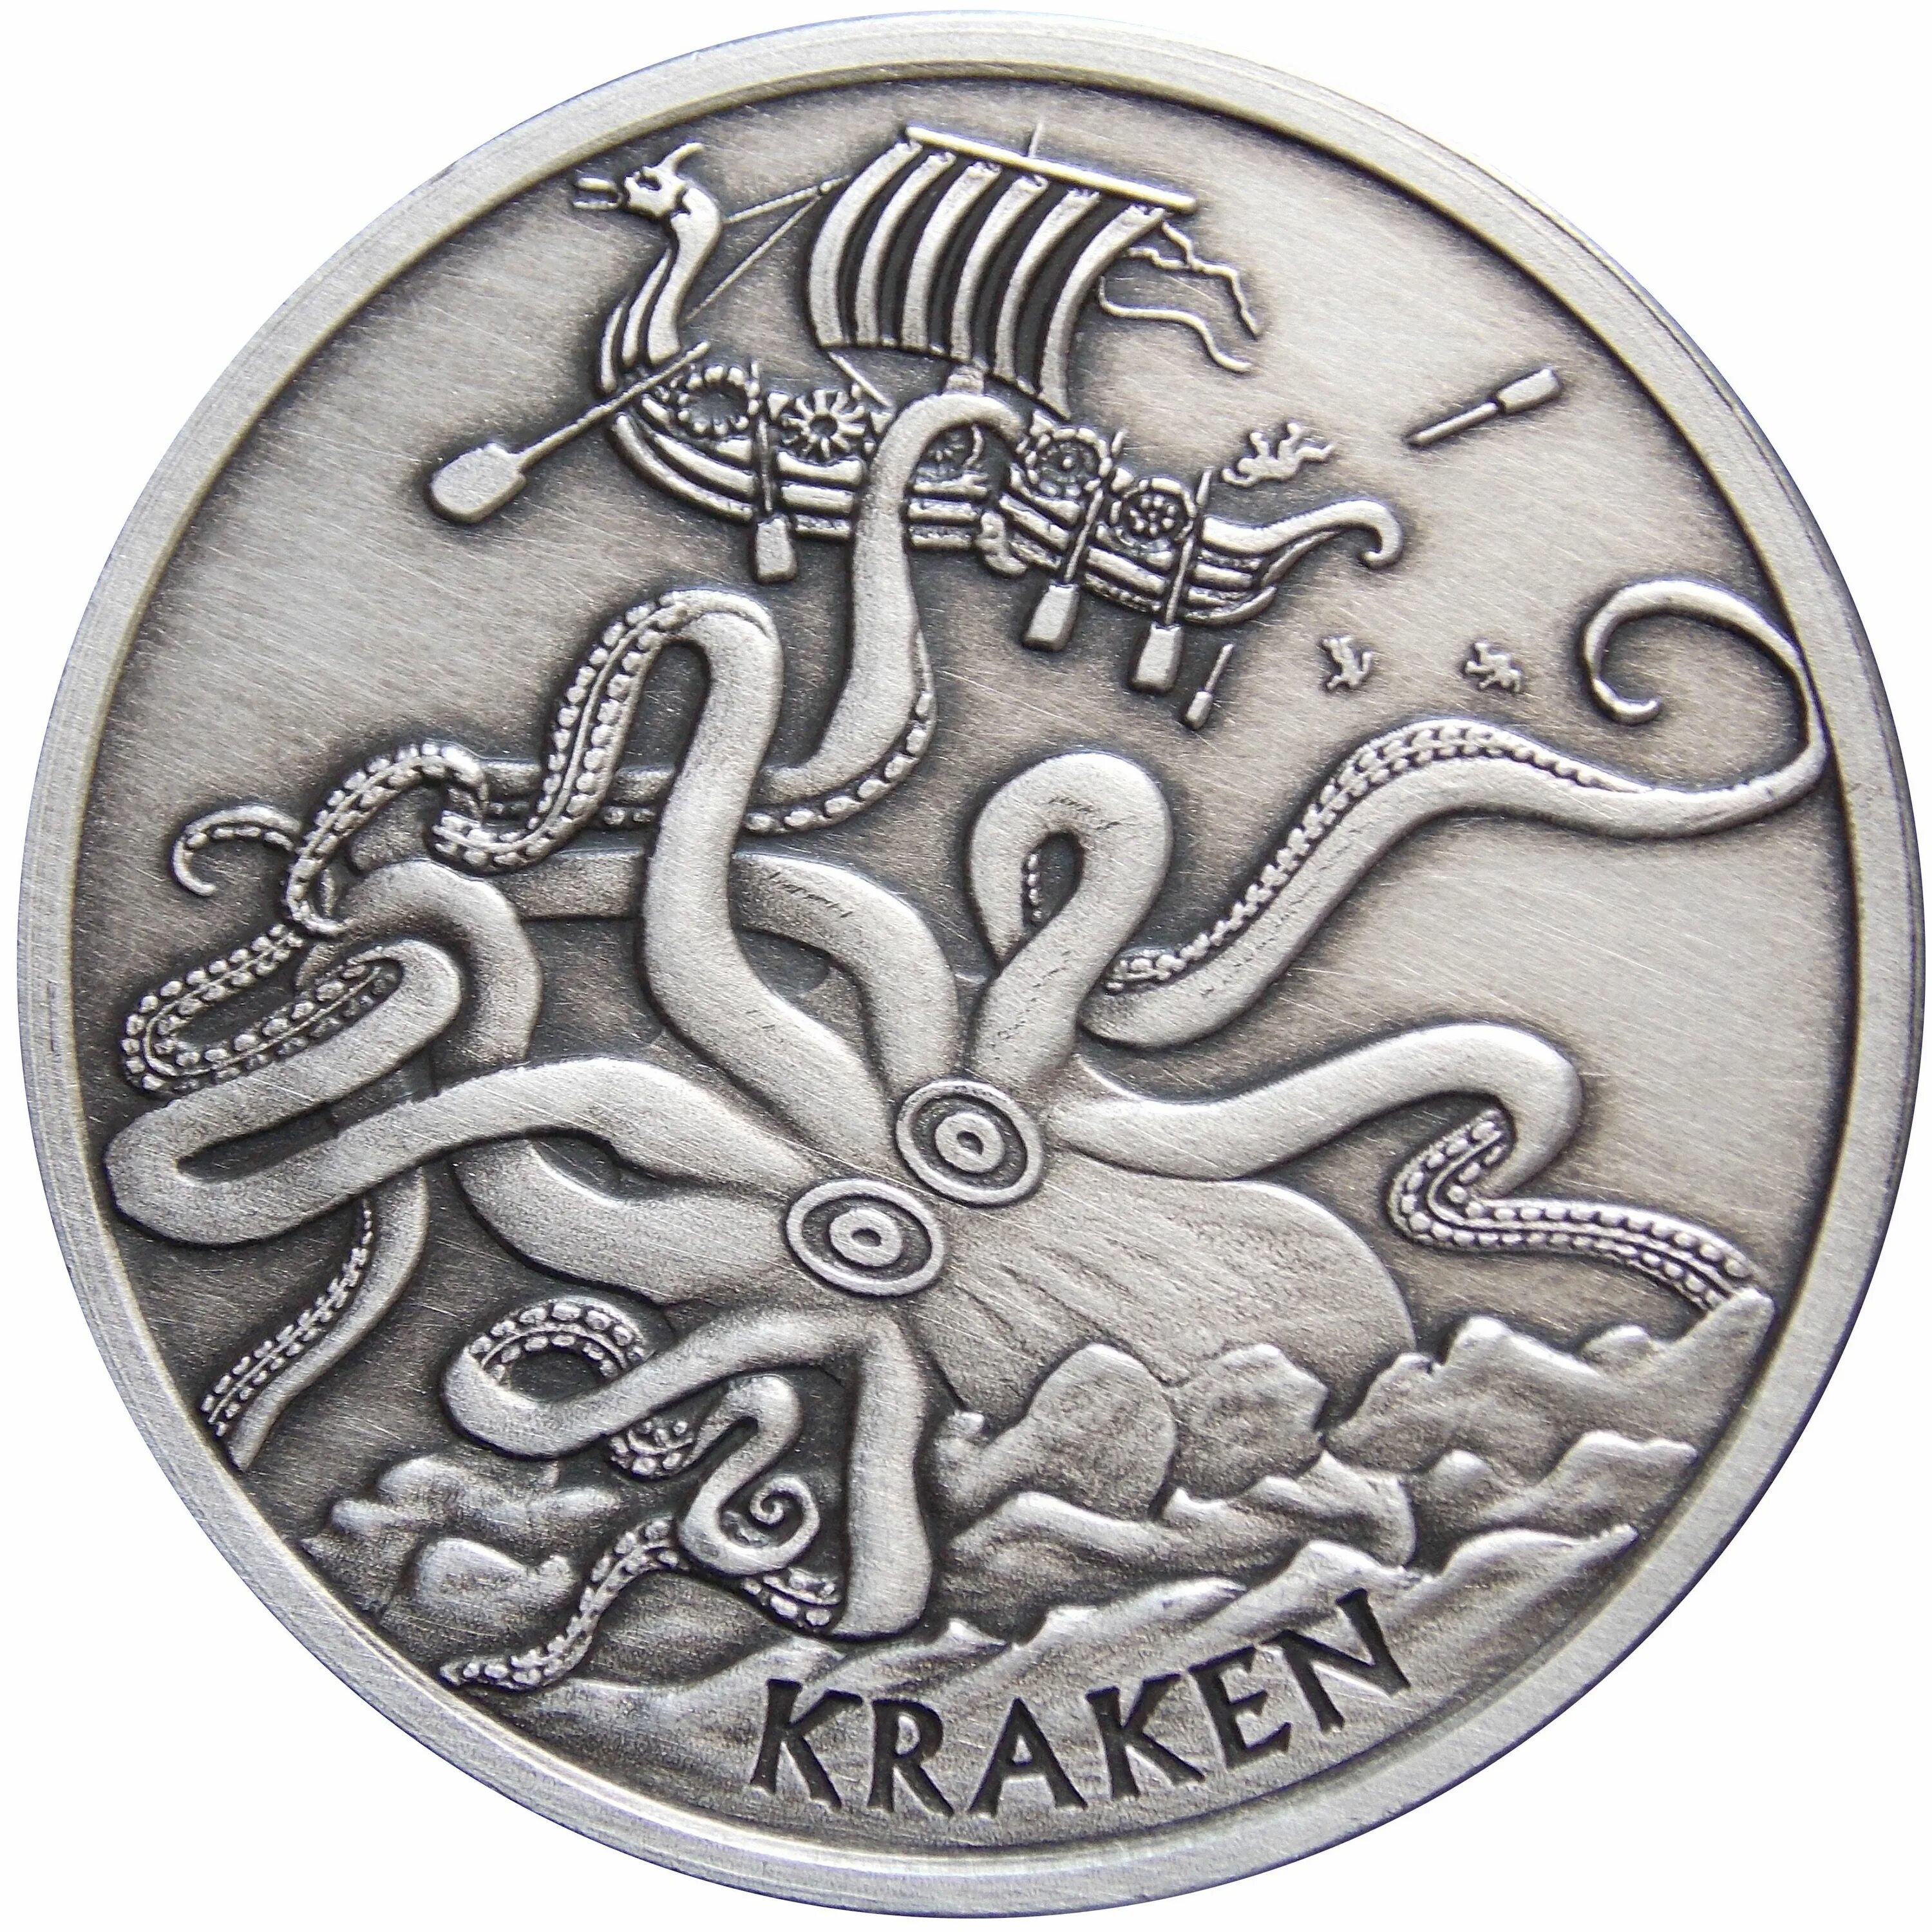 Xblast монета. Монета Кракен. Серебряная монета Кракен. Монета с осьминогом. Античные серебряные монеты.